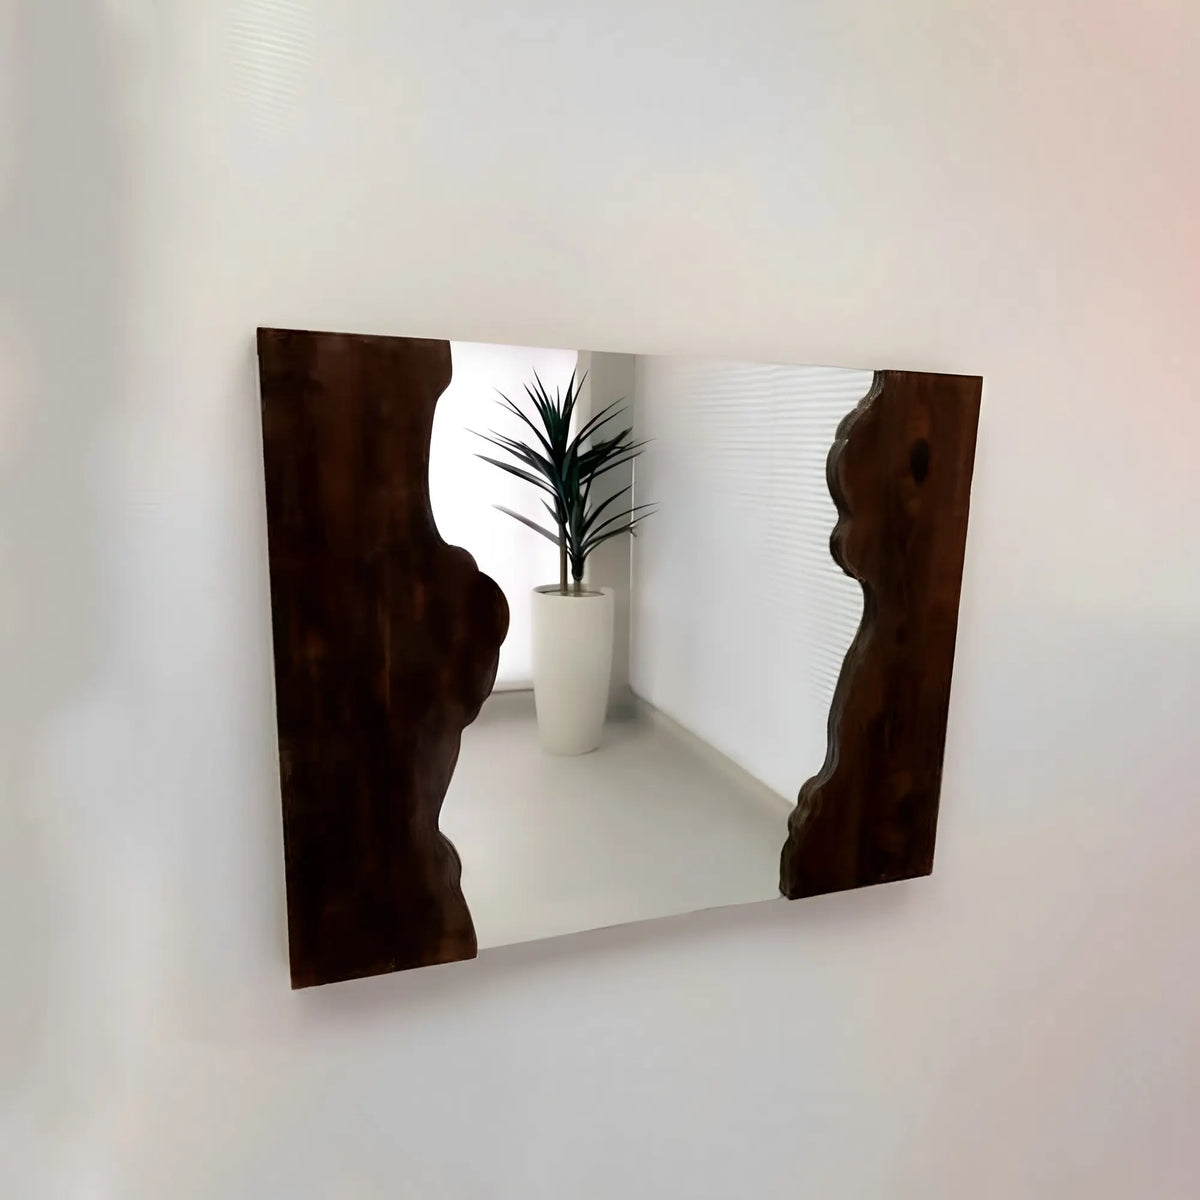 Gabrielle Rustic Wall Wooden Mirror